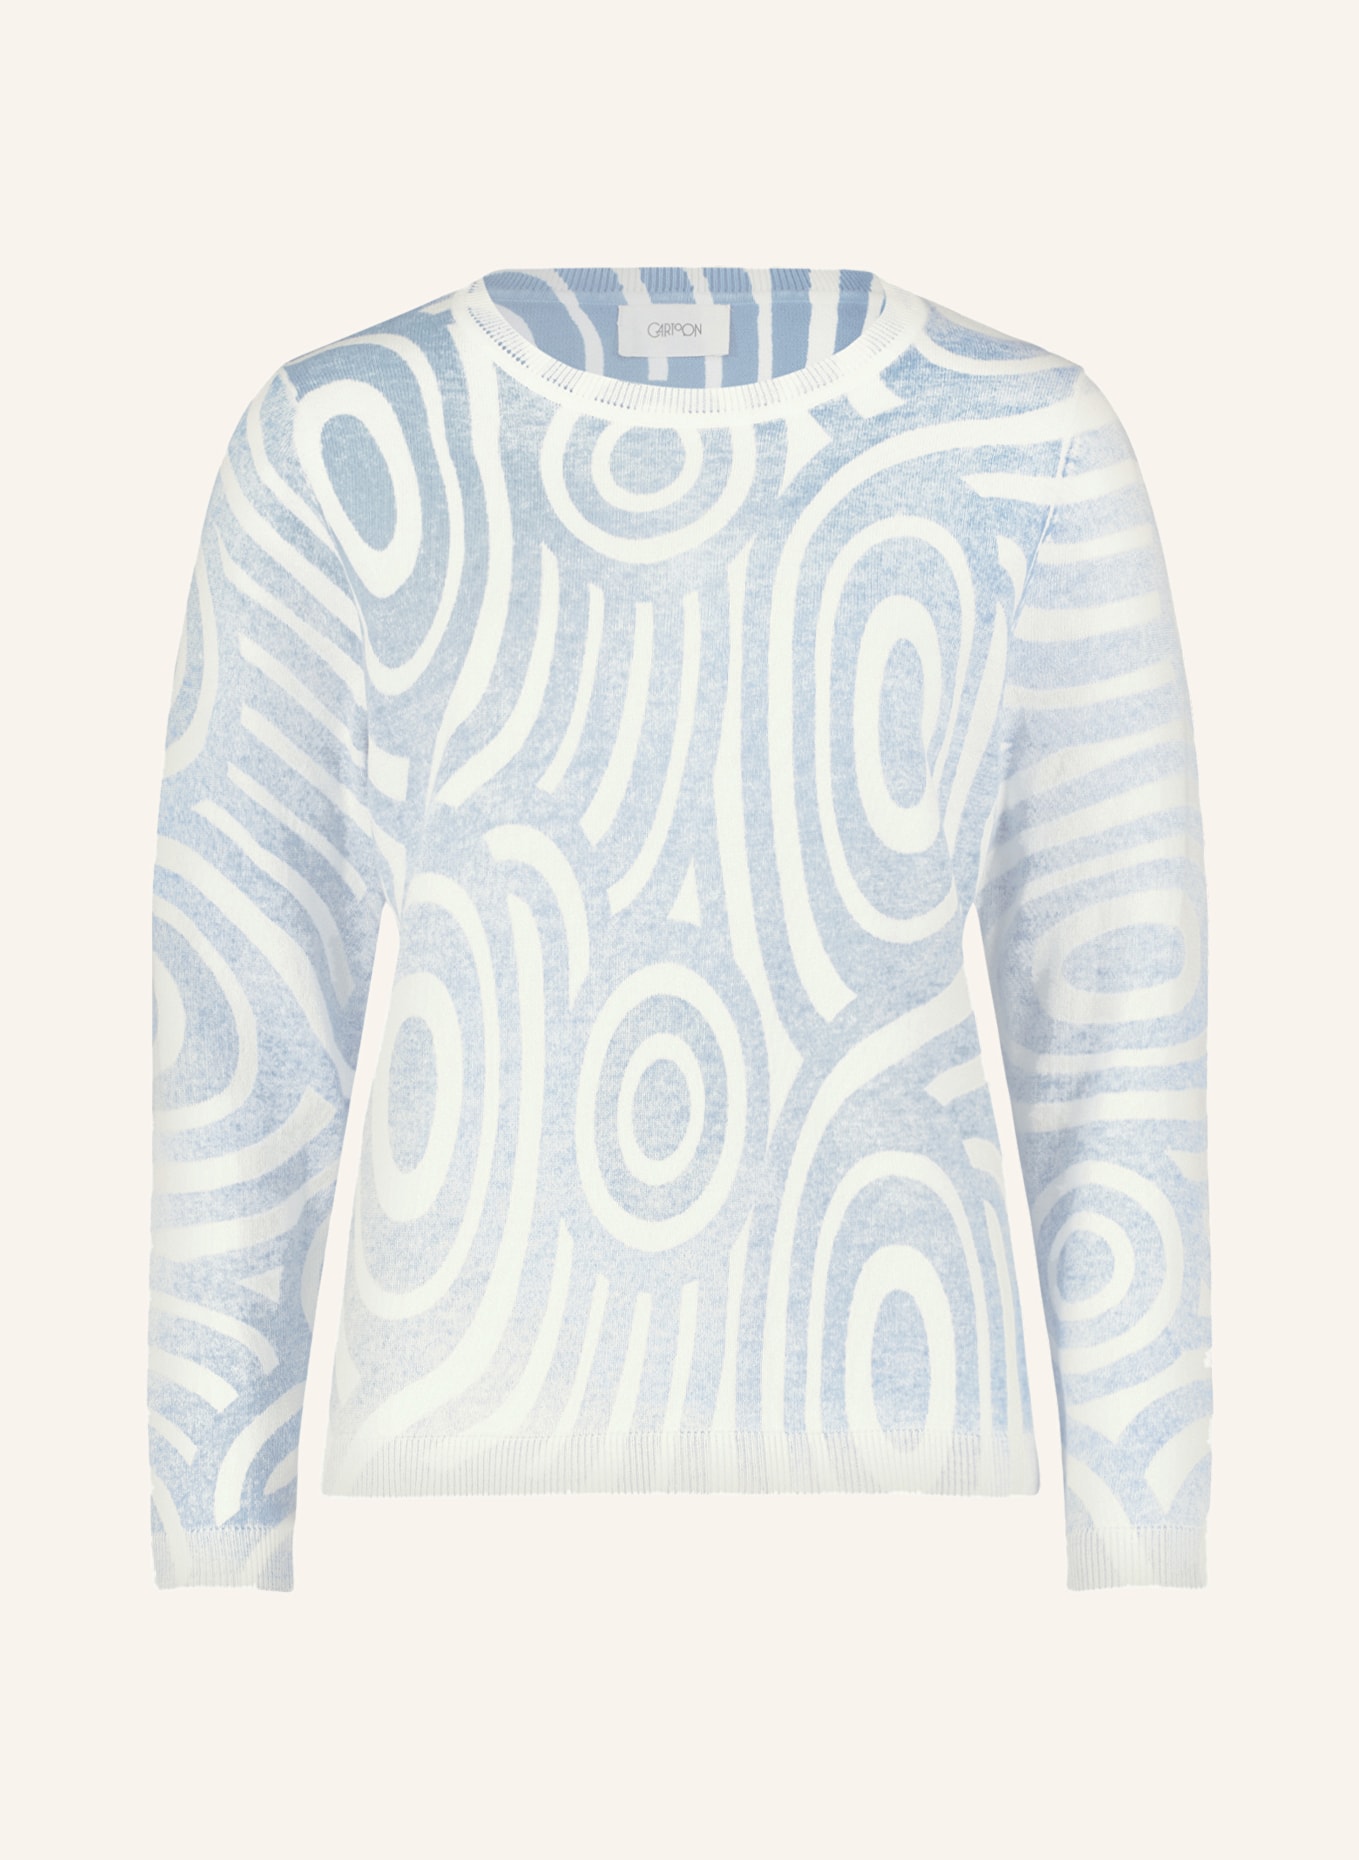 CARTOON Pullover, Farbe: WEISS/ BLAU (Bild 1)